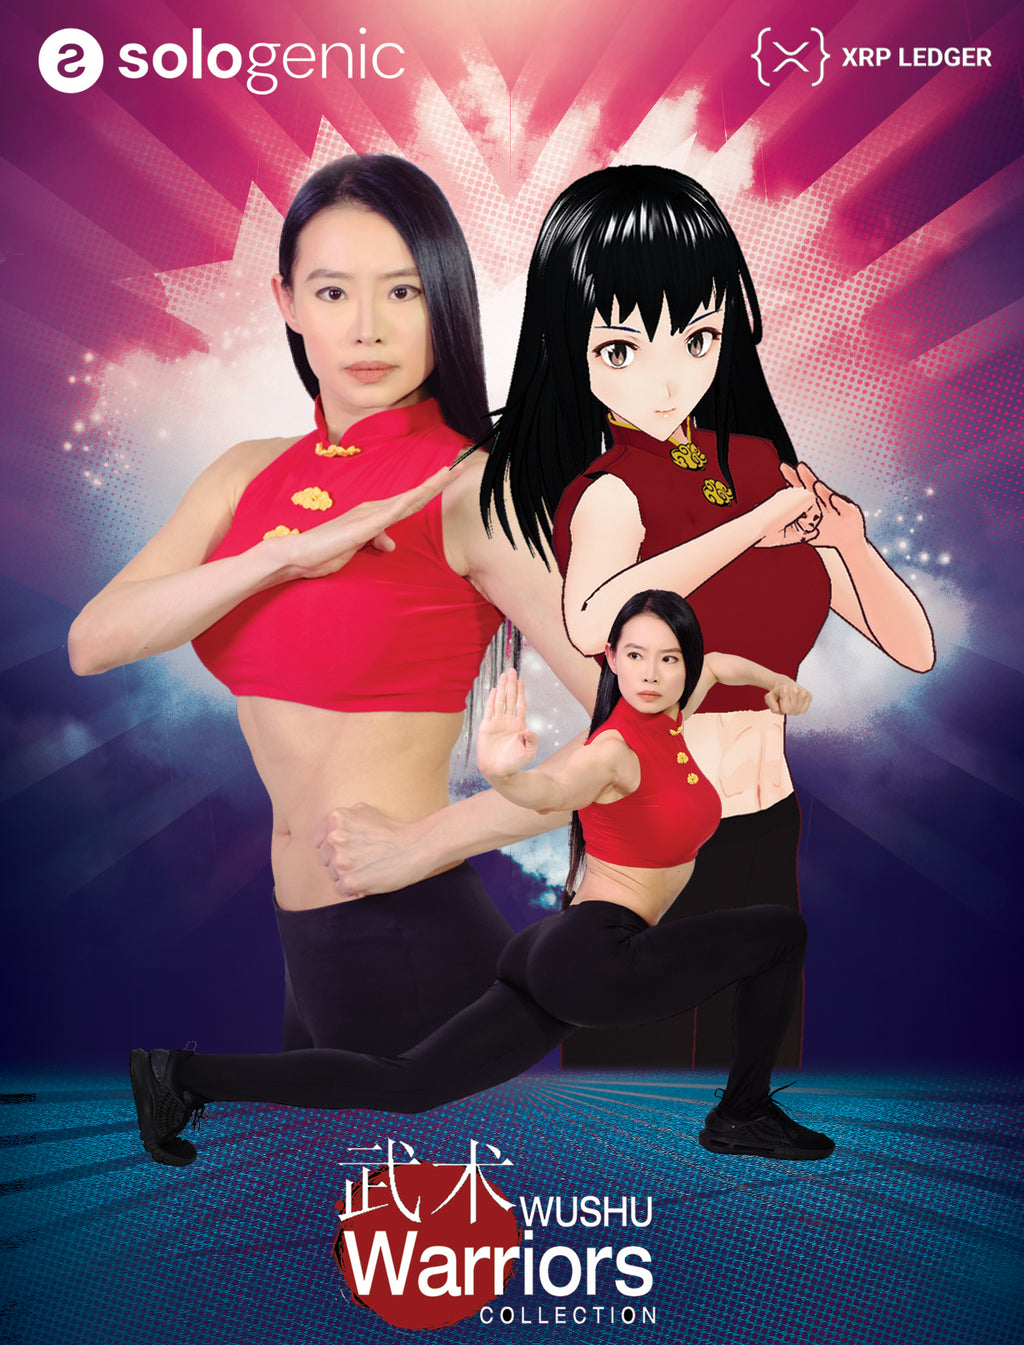 International Wushu Champion JANICE HUNG Launched “WUSHU WARRIORS” NFT COLLECTION